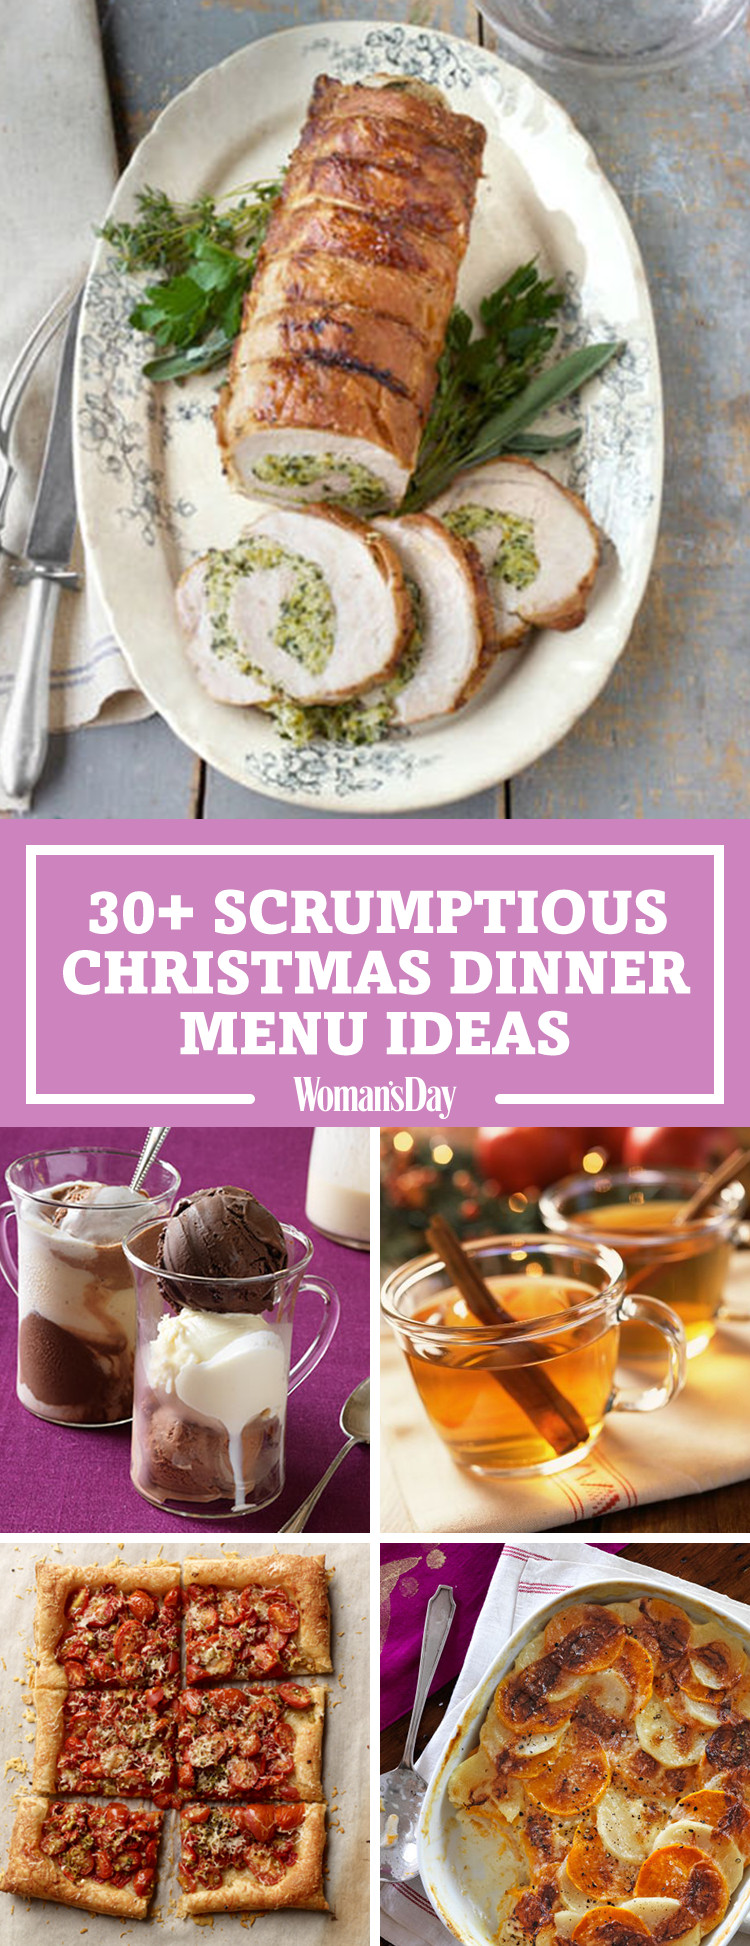 Menus For Christmas Dinners
 Best Christmas Dinner Menu Ideas for 2017